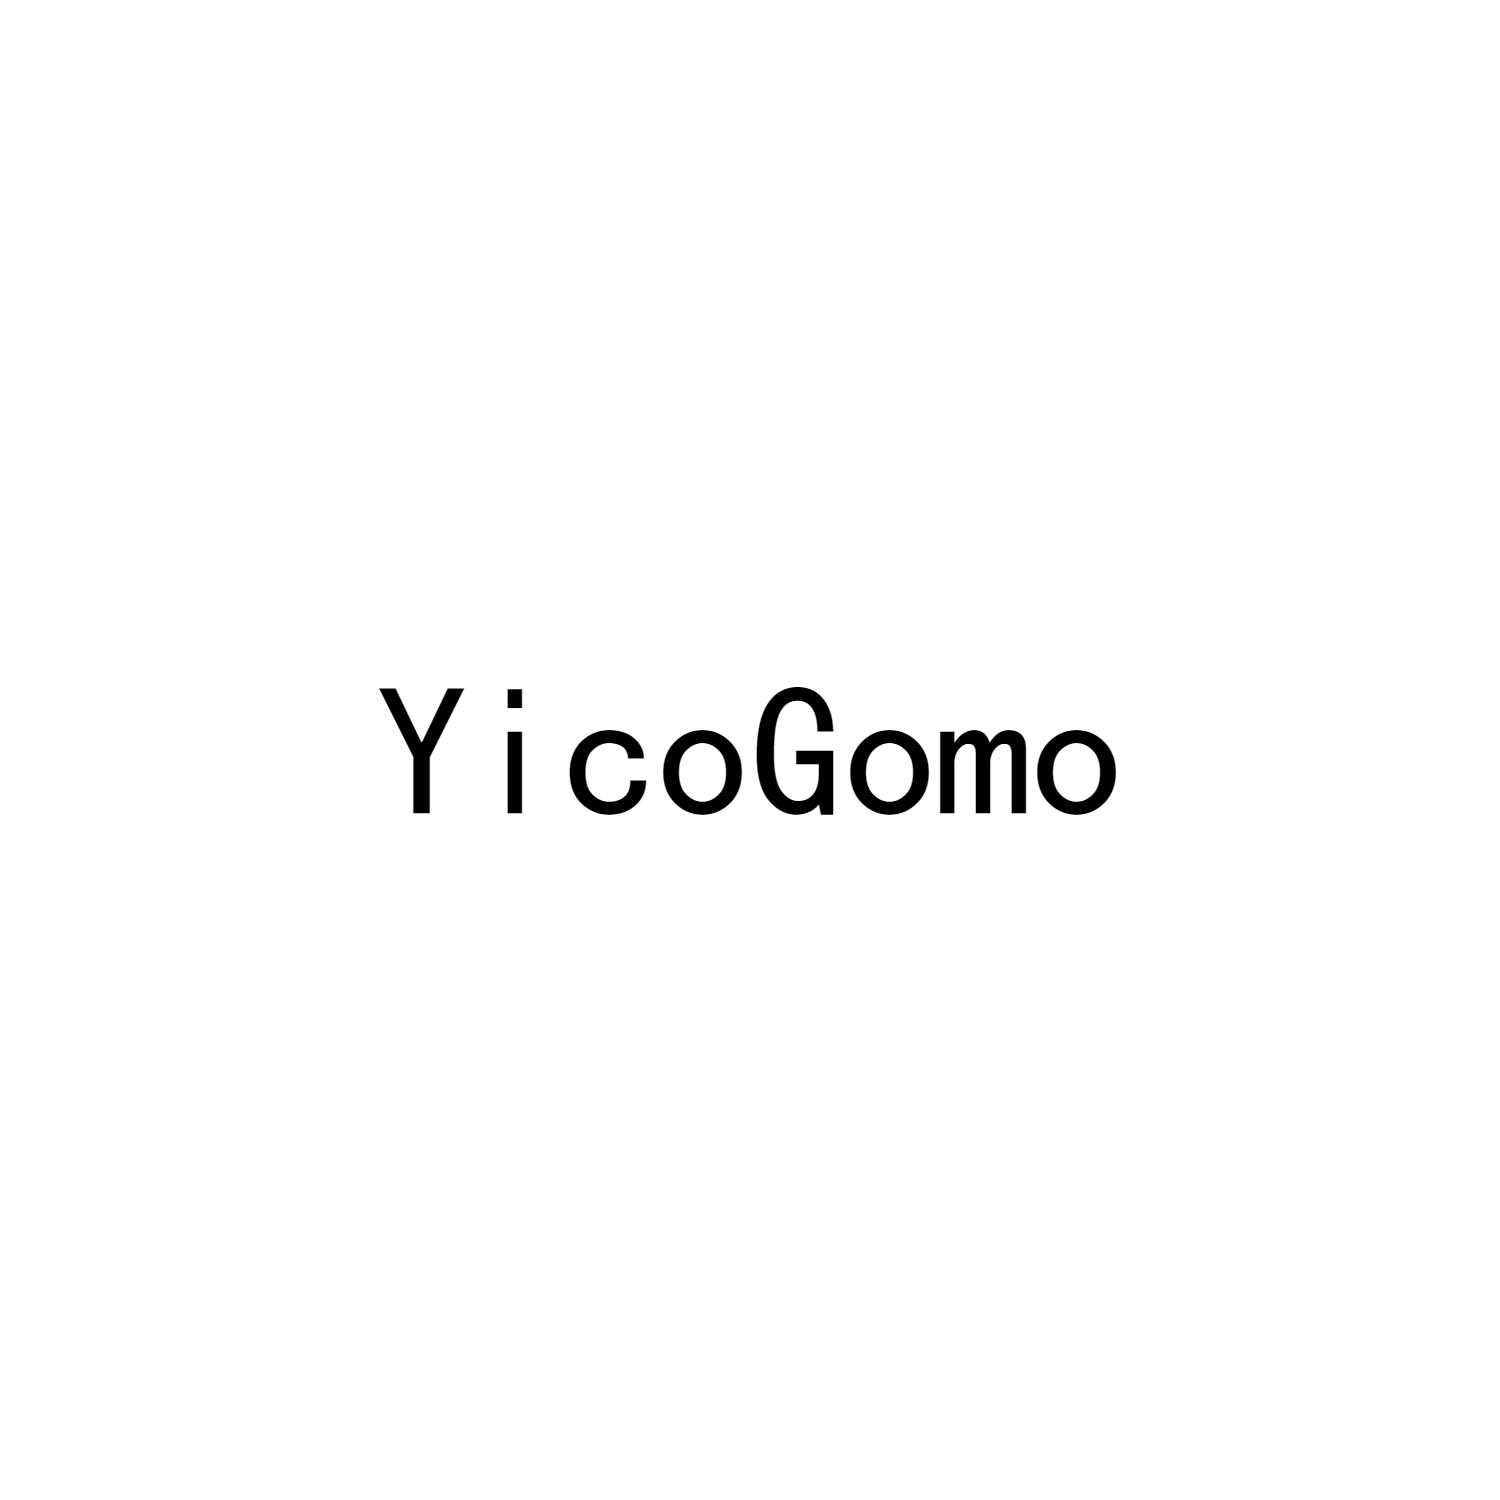 YICOGOMO